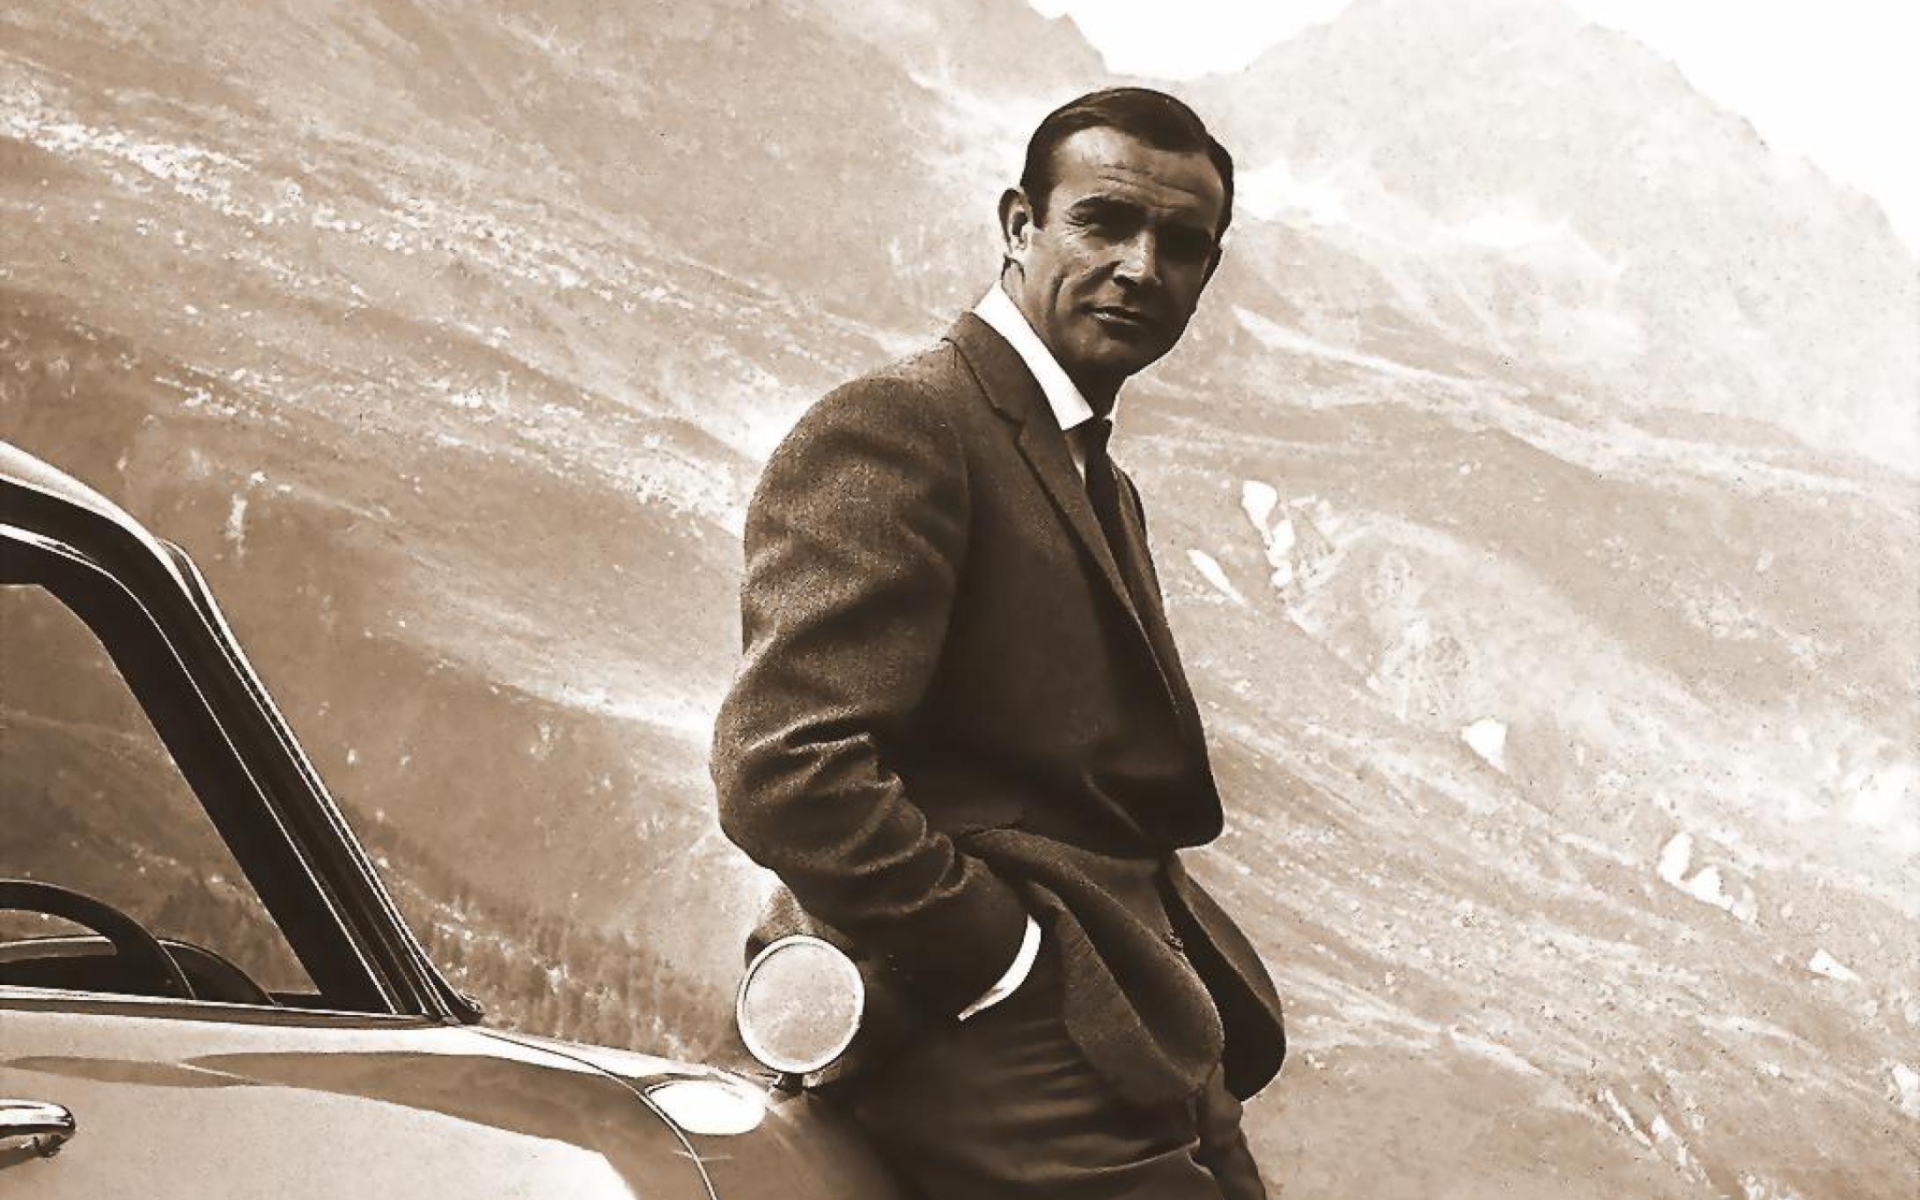 James Bond Agent 007 Goldfinger Wallpaper For Widescreen Desktop Pc 19x1080 Full Hd